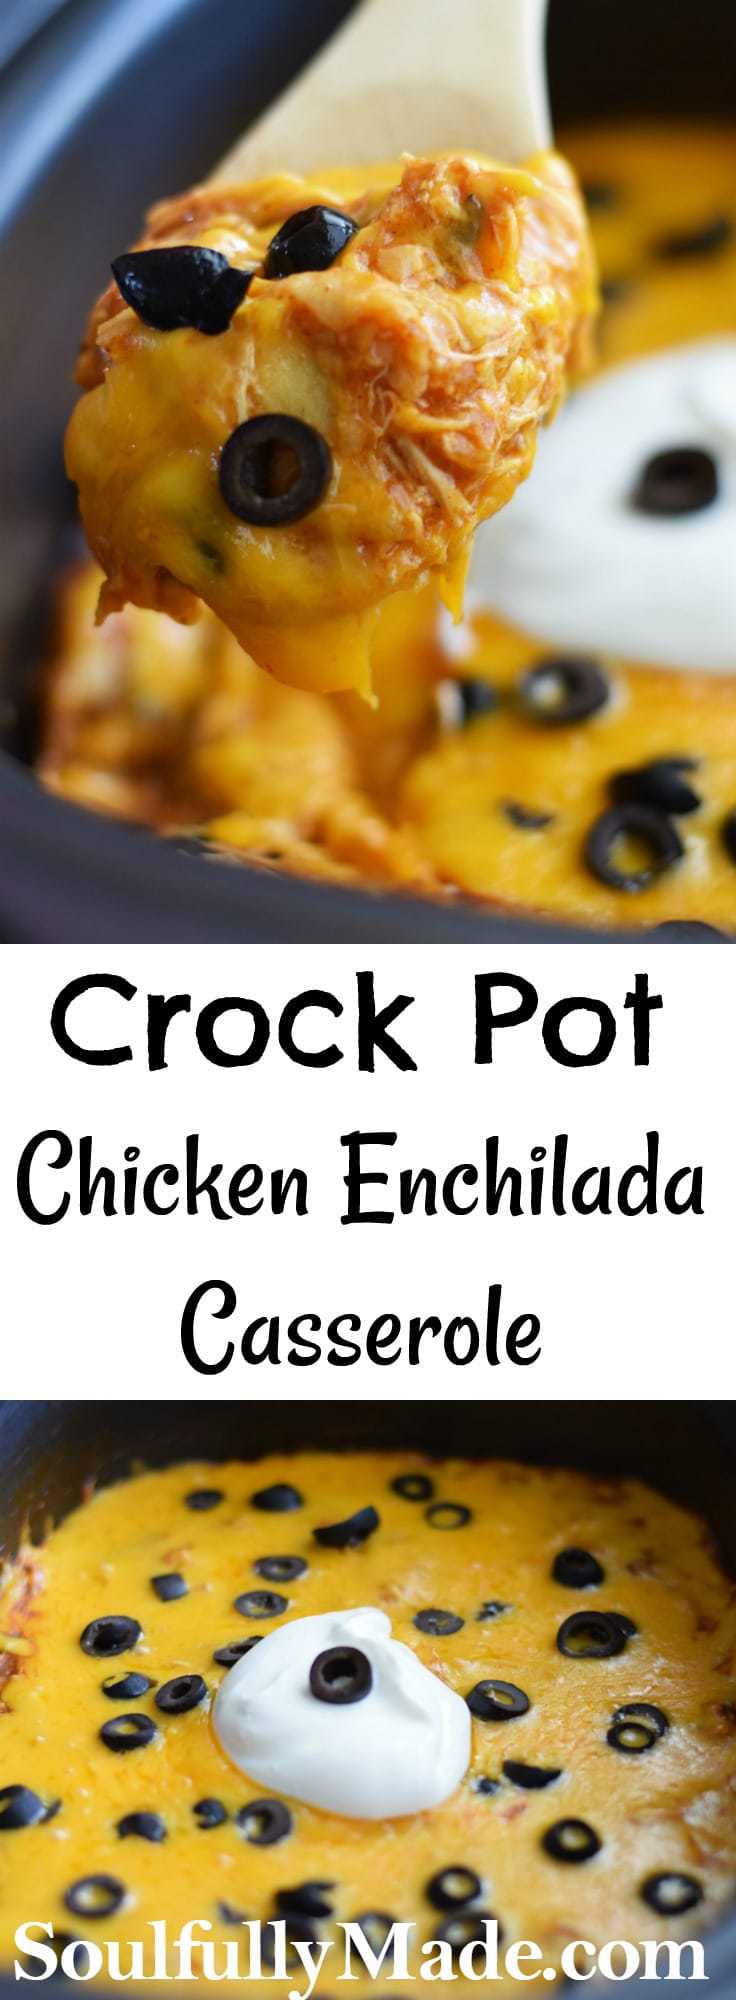 the pinterest image for this crock pot chicken enchilada casserole recipe